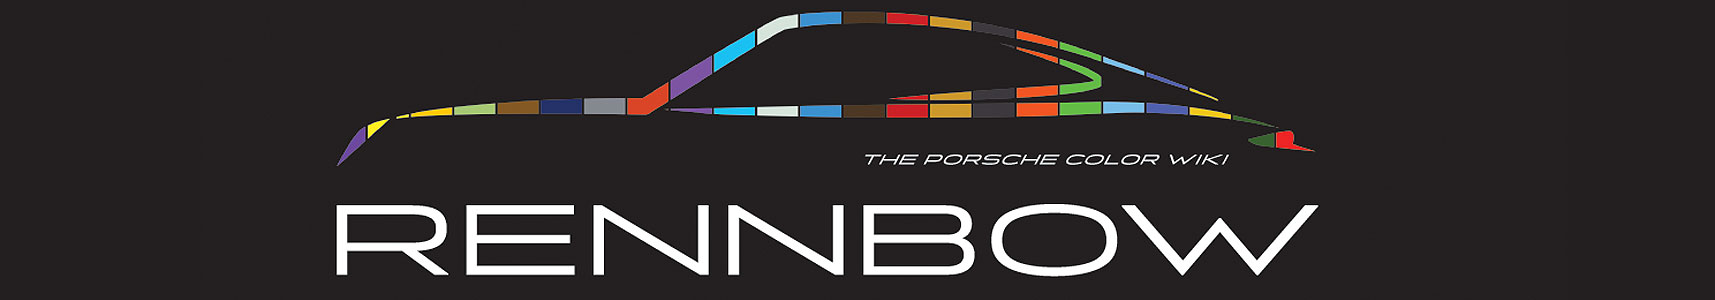 Rennbow: The Porsche Color Wiki